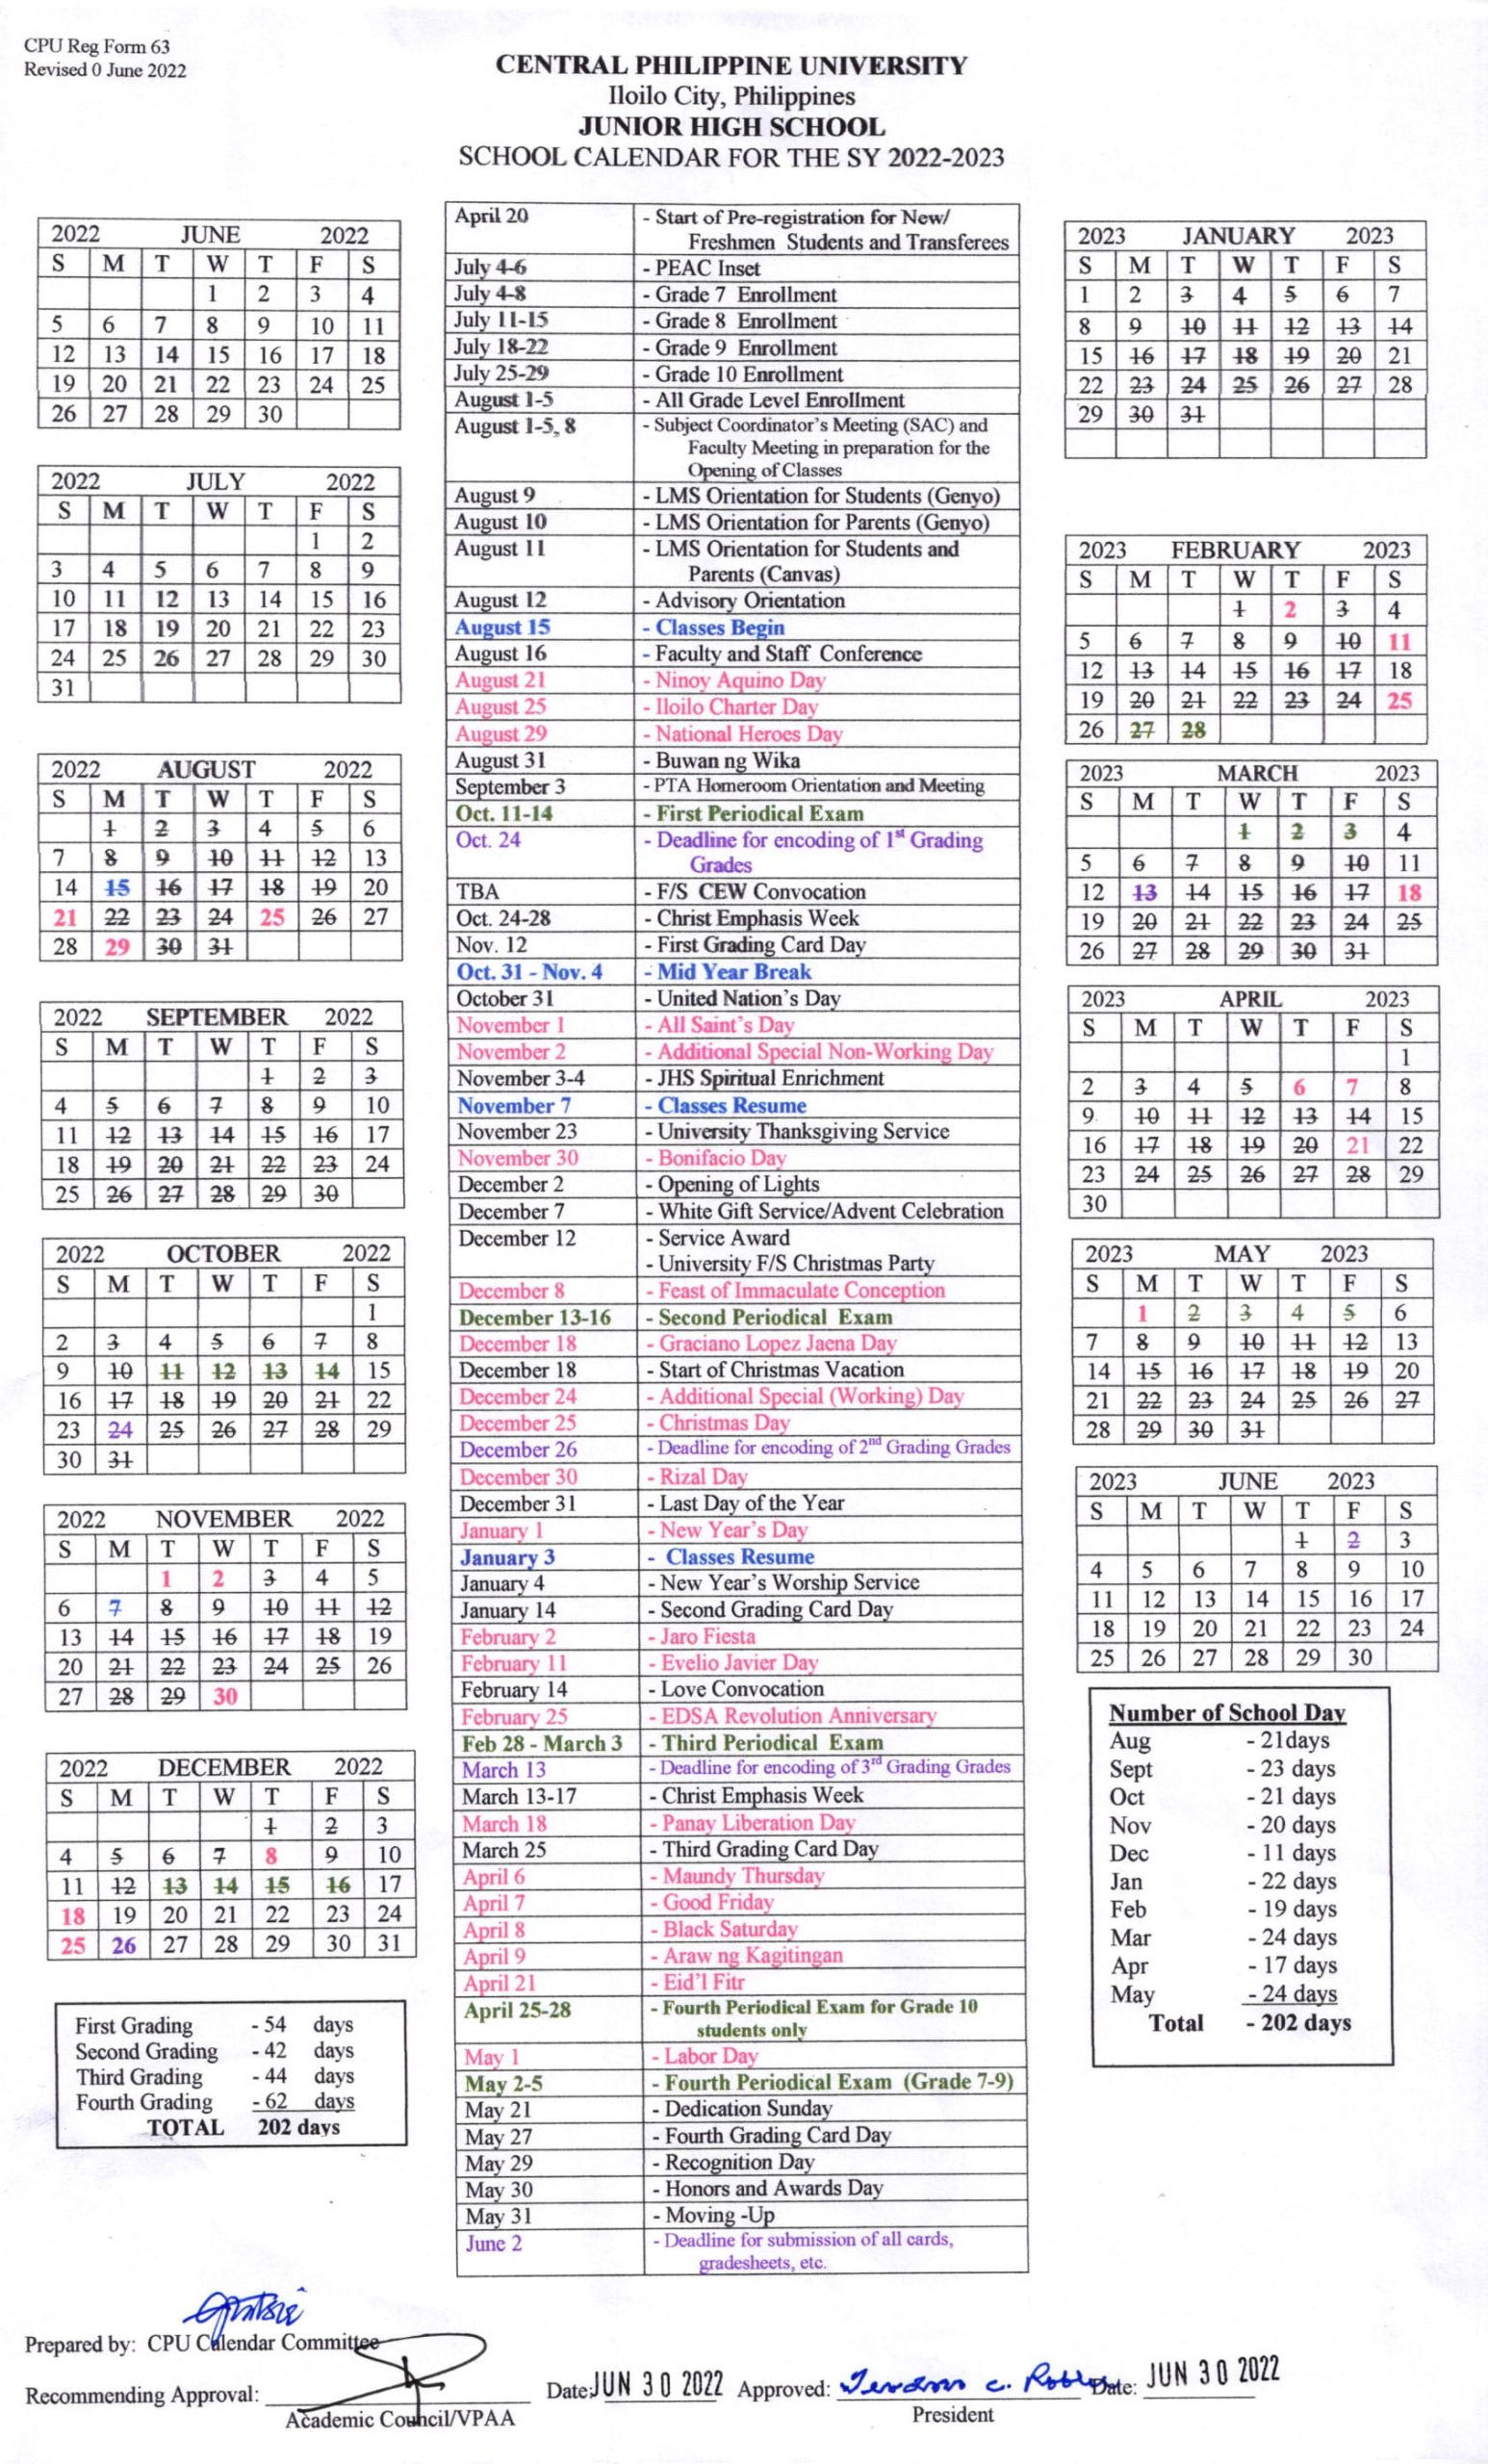 School Calendars - Central Philippine University